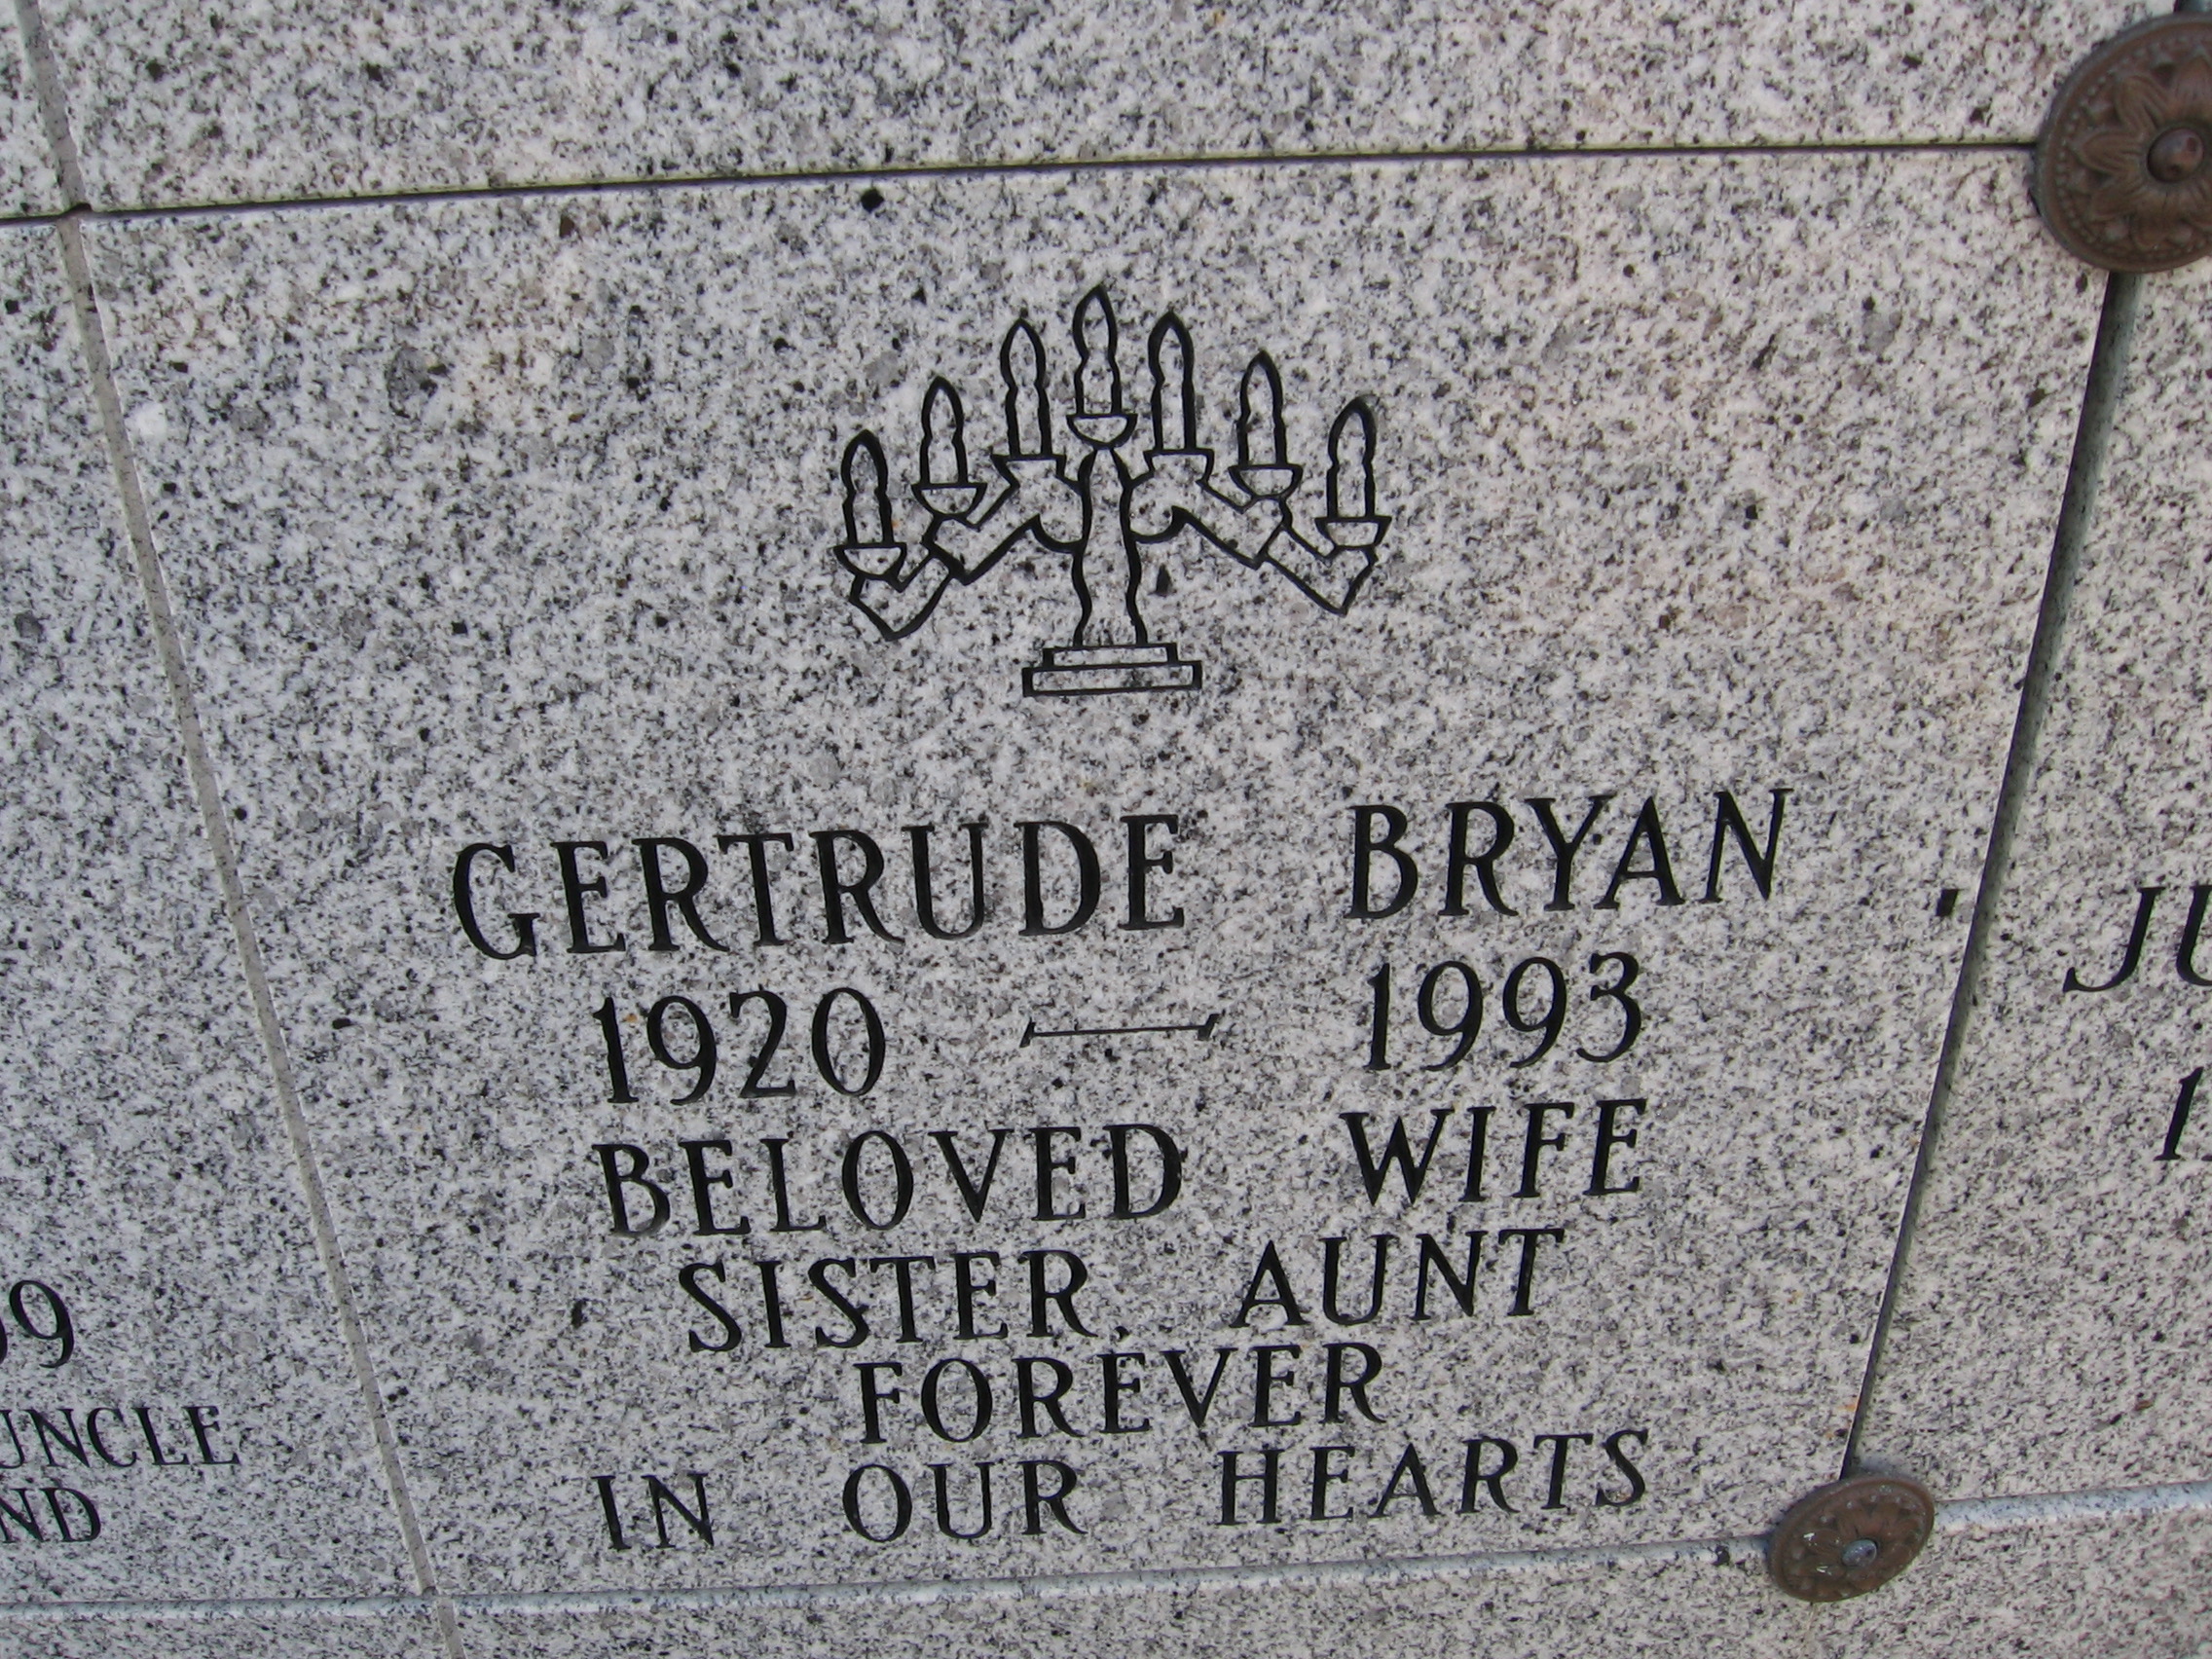 Gertrude Bryan